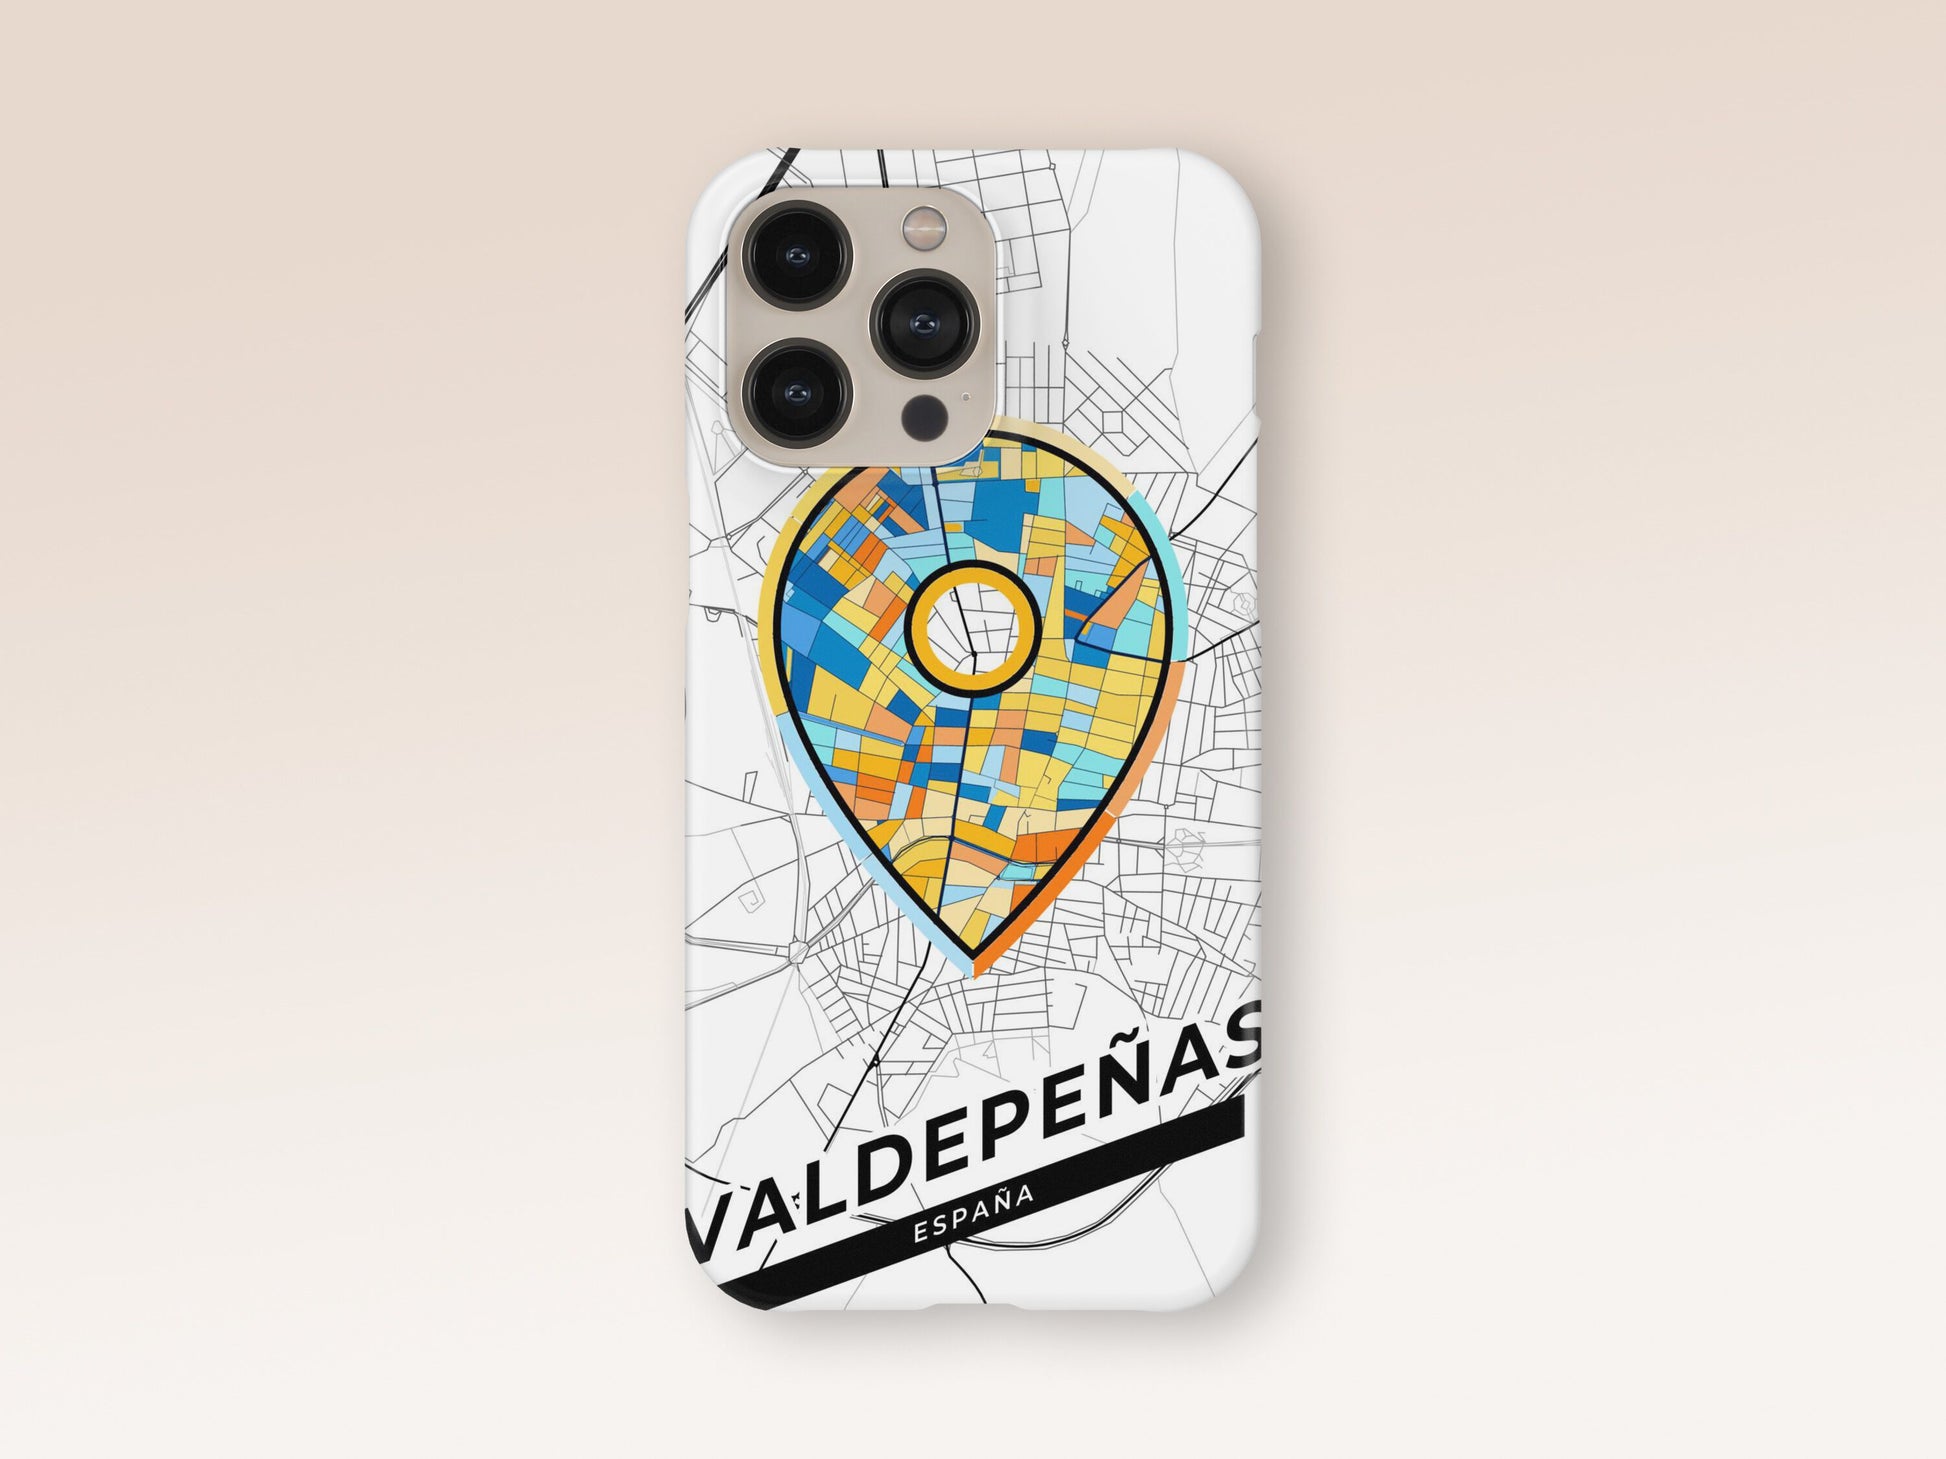 Valdepeñas Spain slim phone case with colorful icon 1